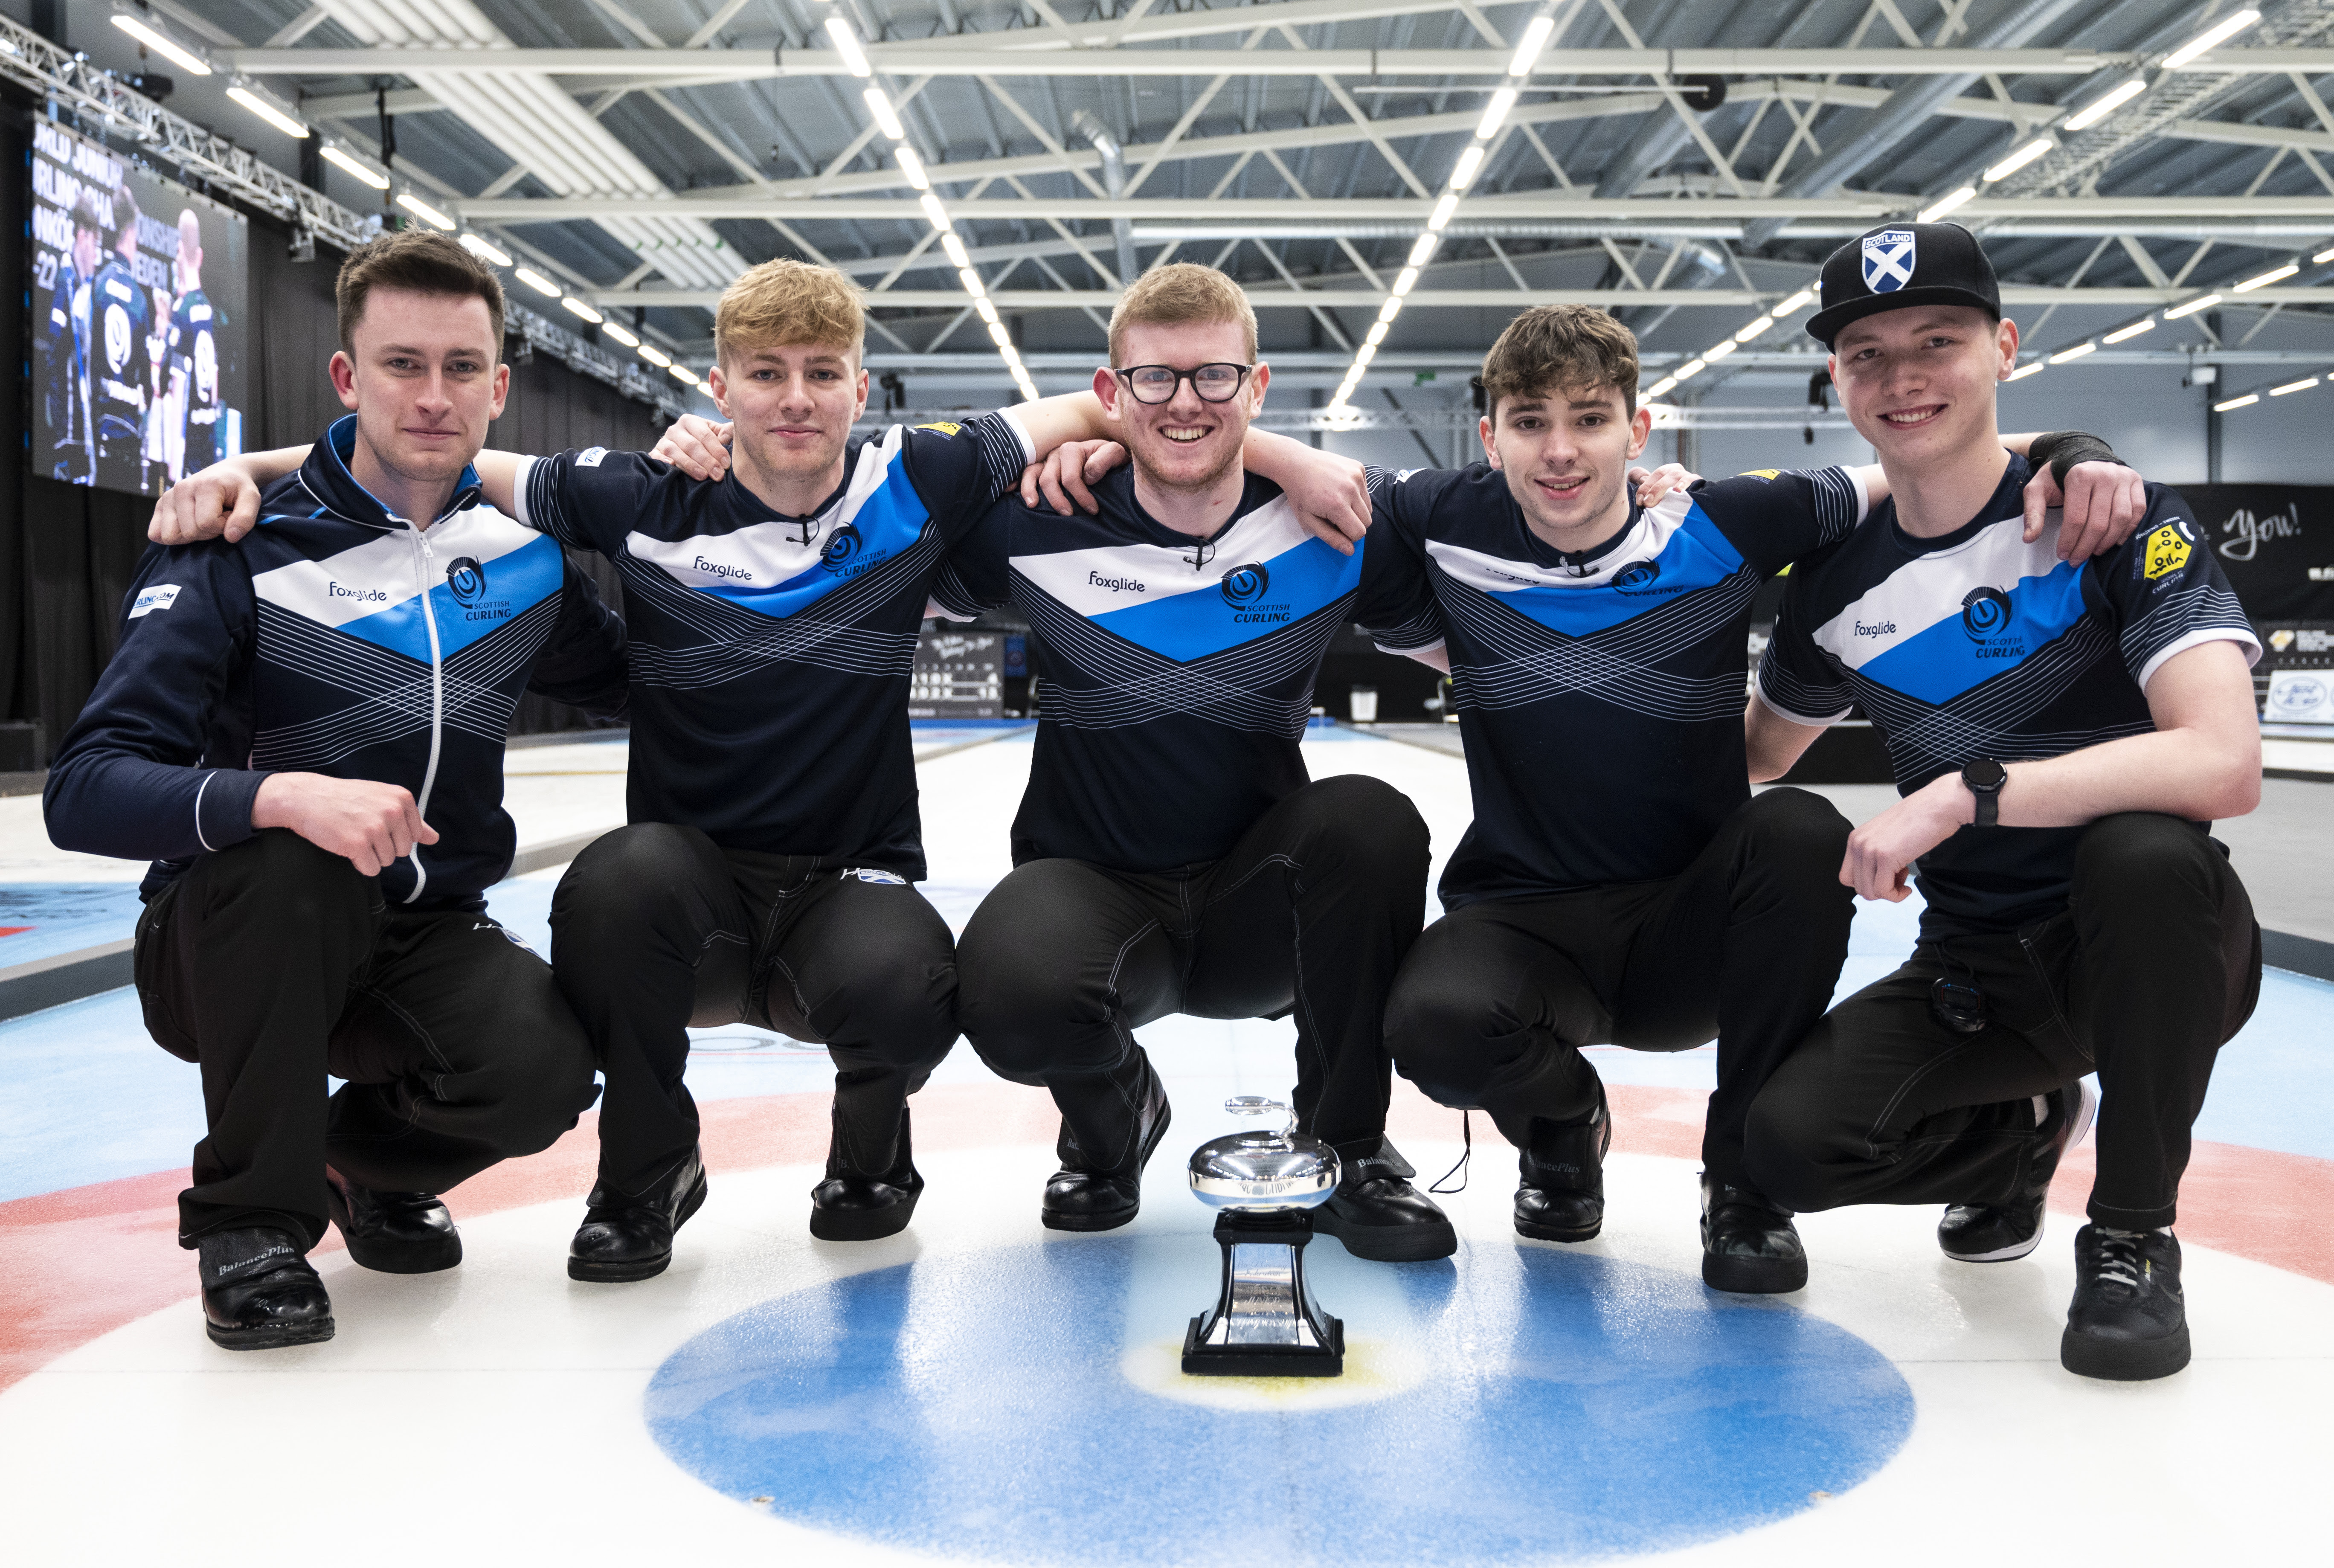 Scotland take home World Junior gold